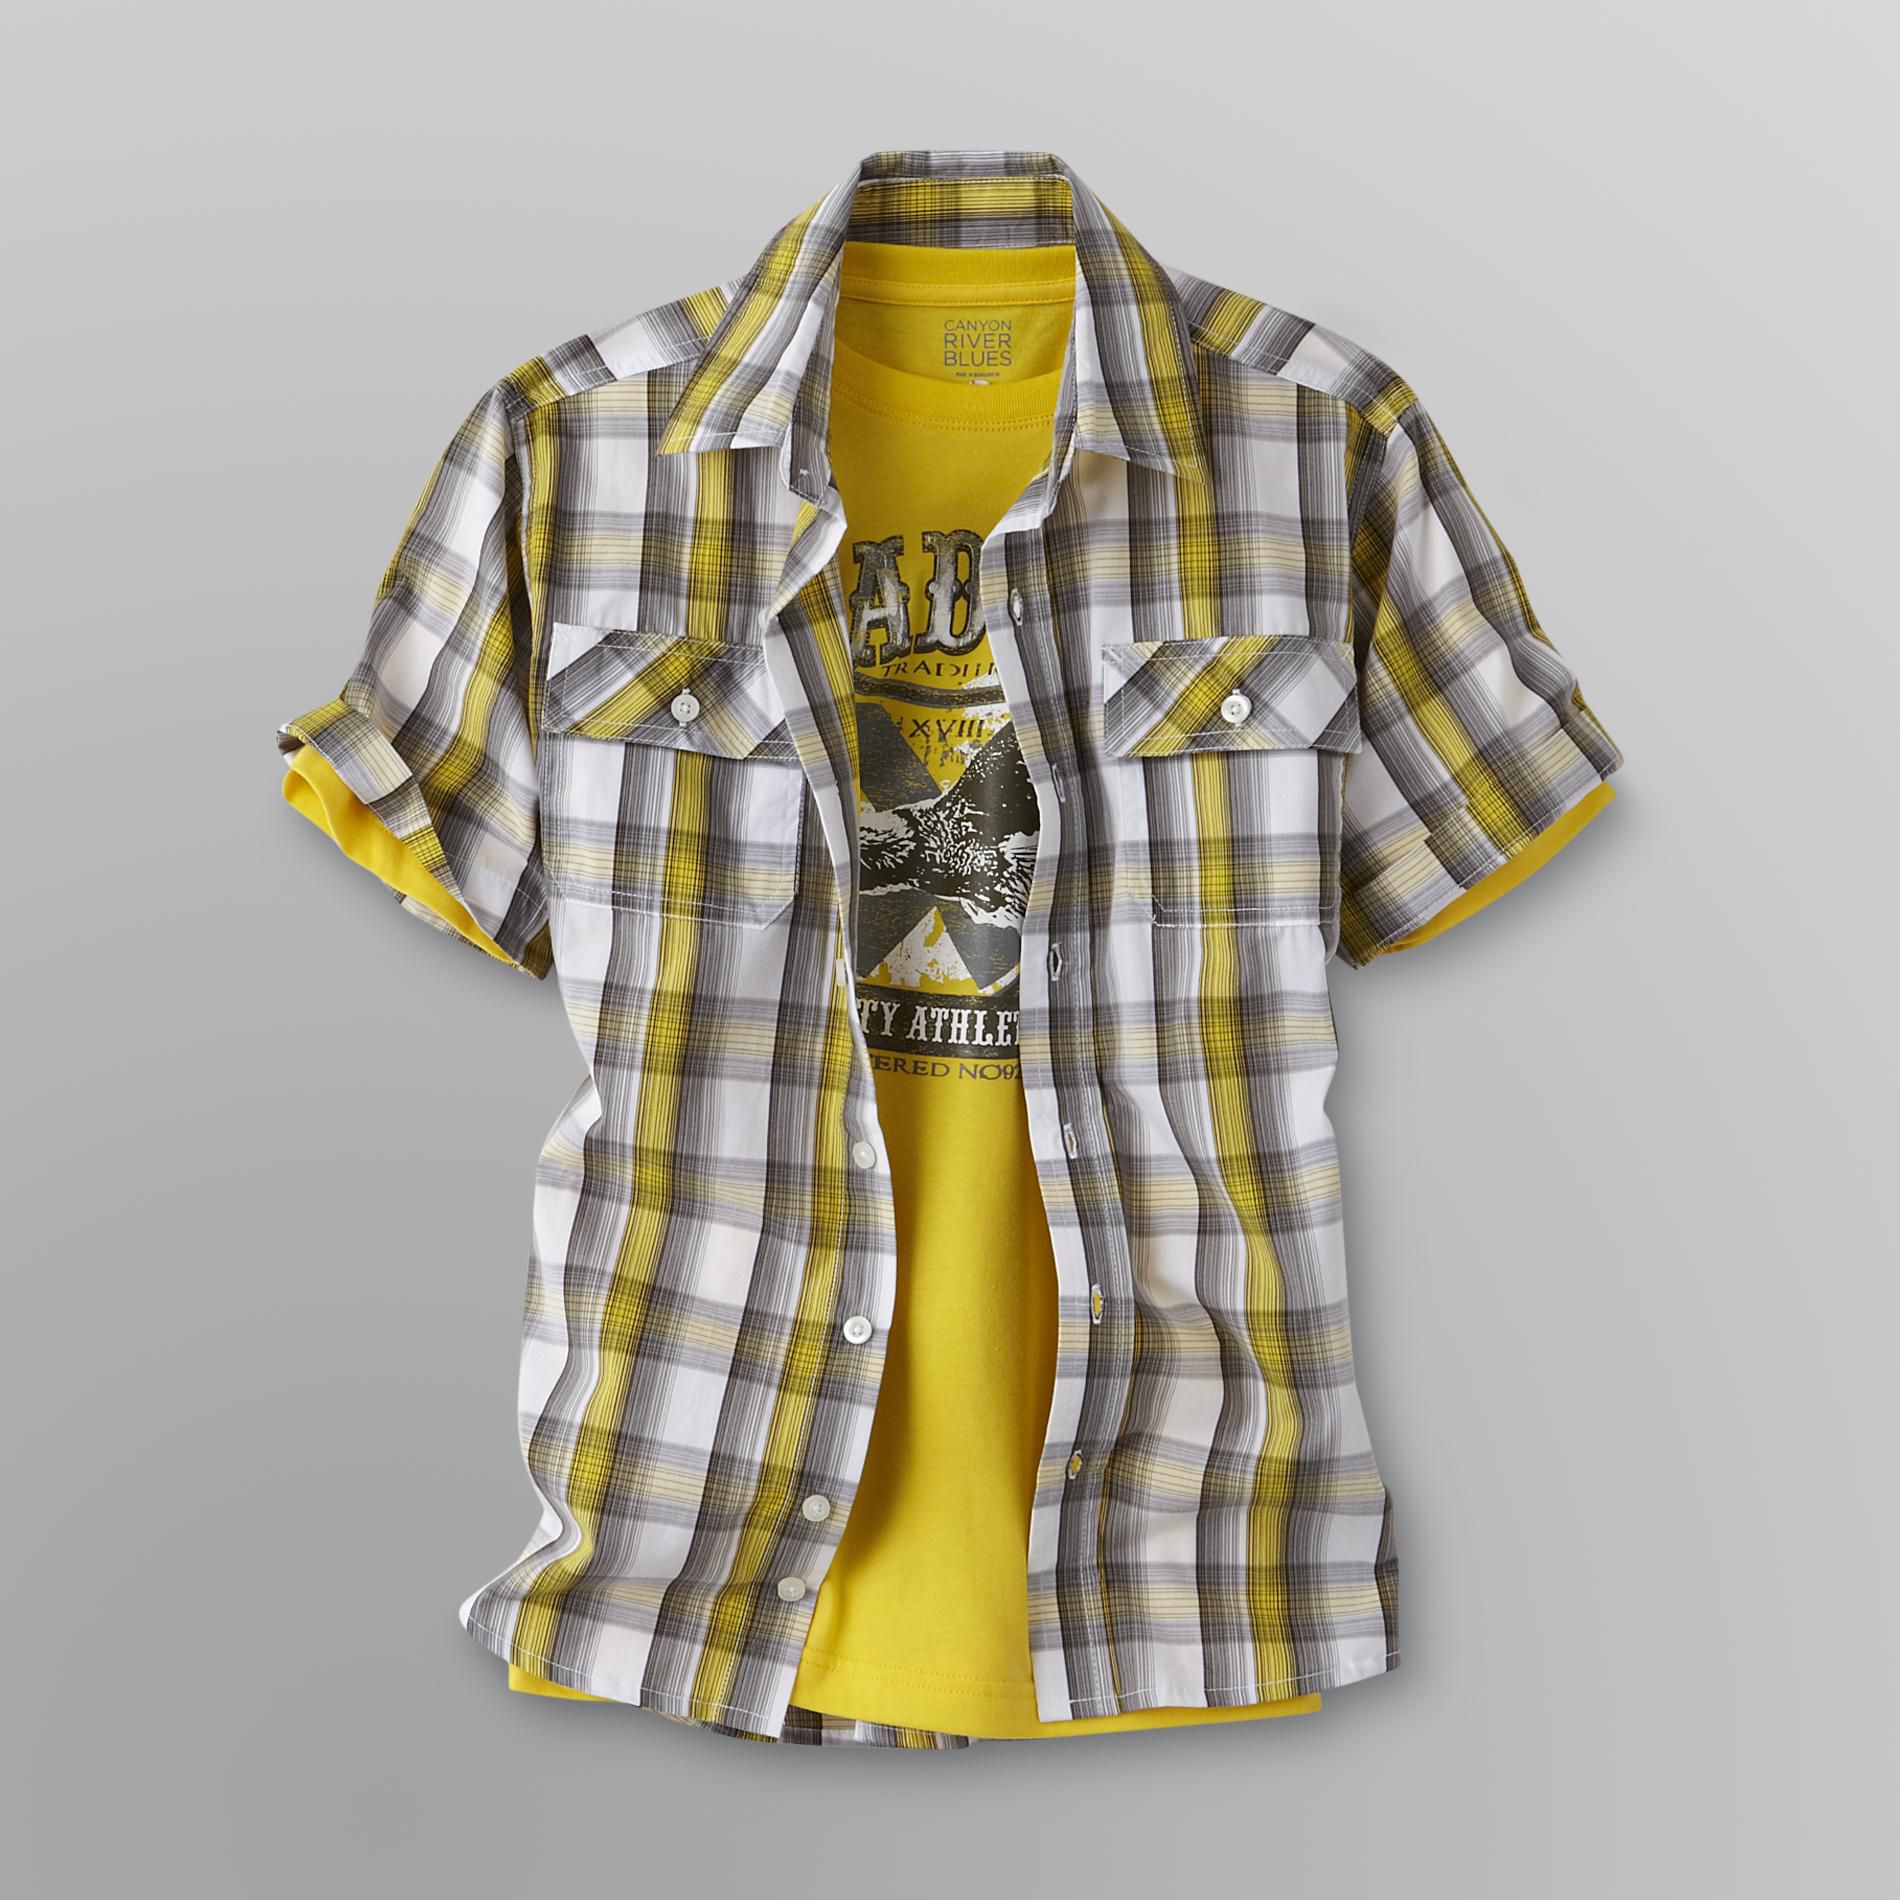 Canyon River Blues Boy's Plaid Shirt and T-Shirt - Varsity